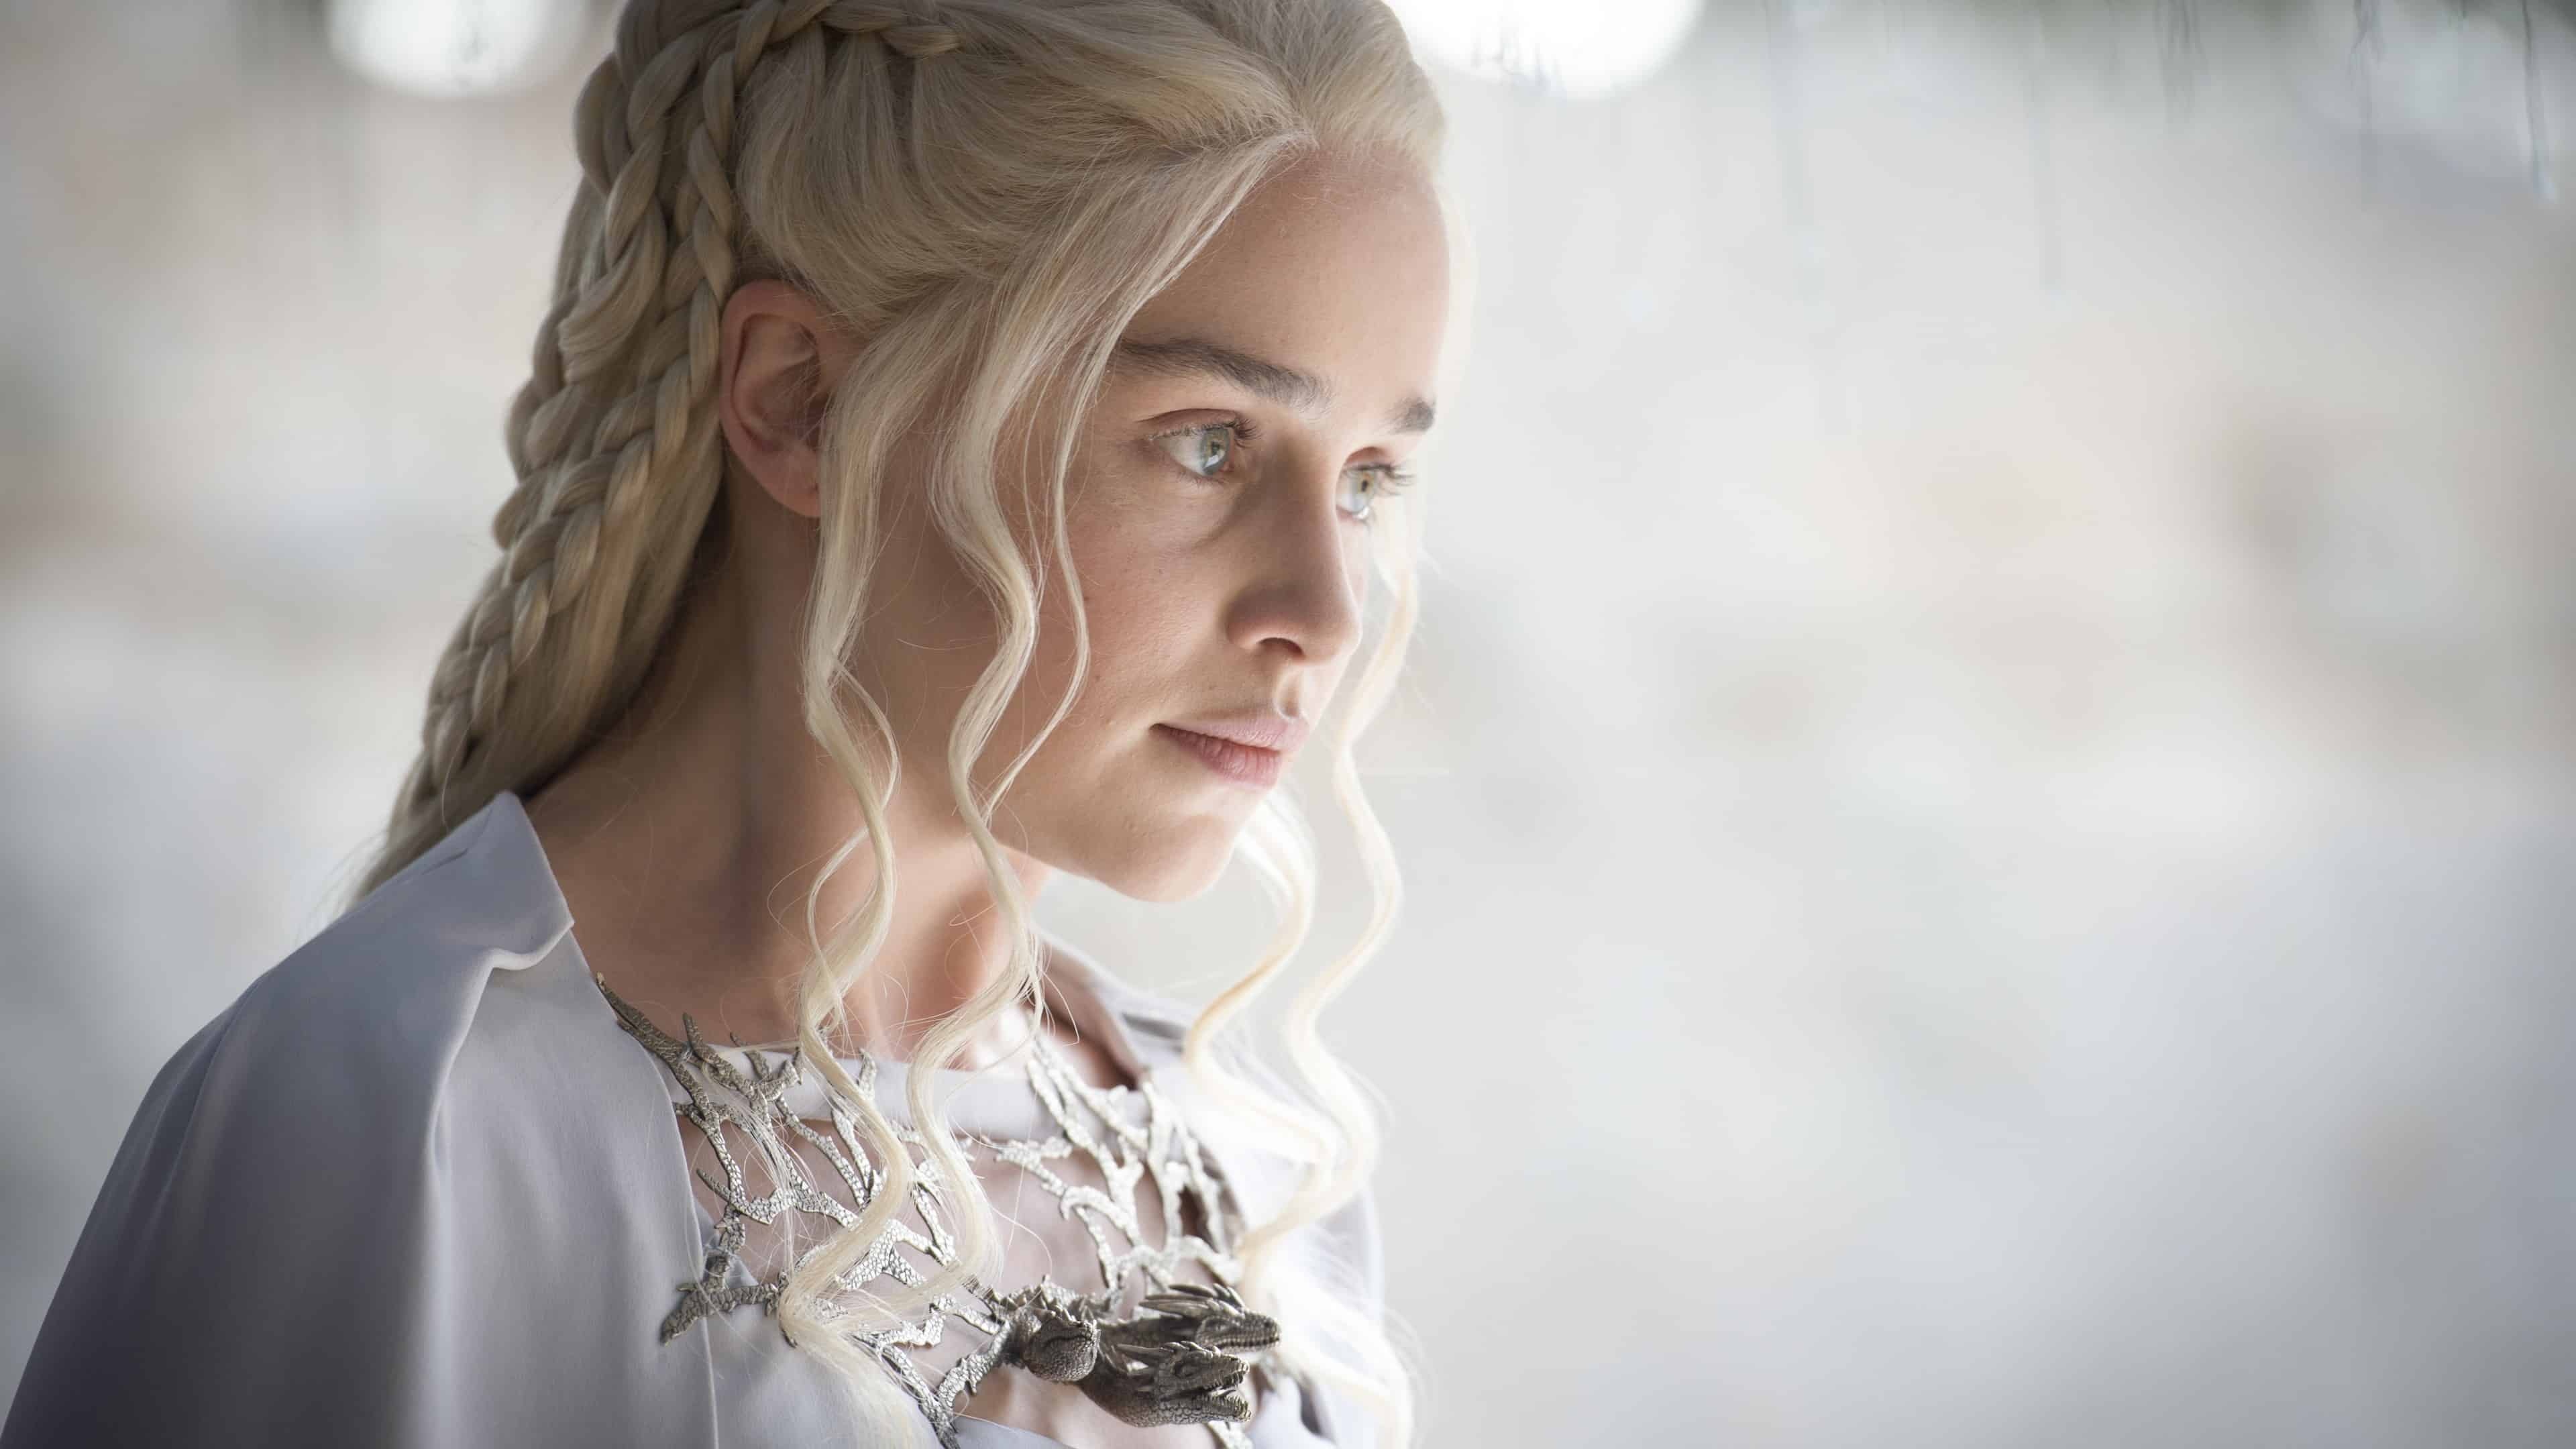 Daenerys, Mother of Dragons, Targaryen queen, 4K wallpaper, 3840x2160 4K Desktop